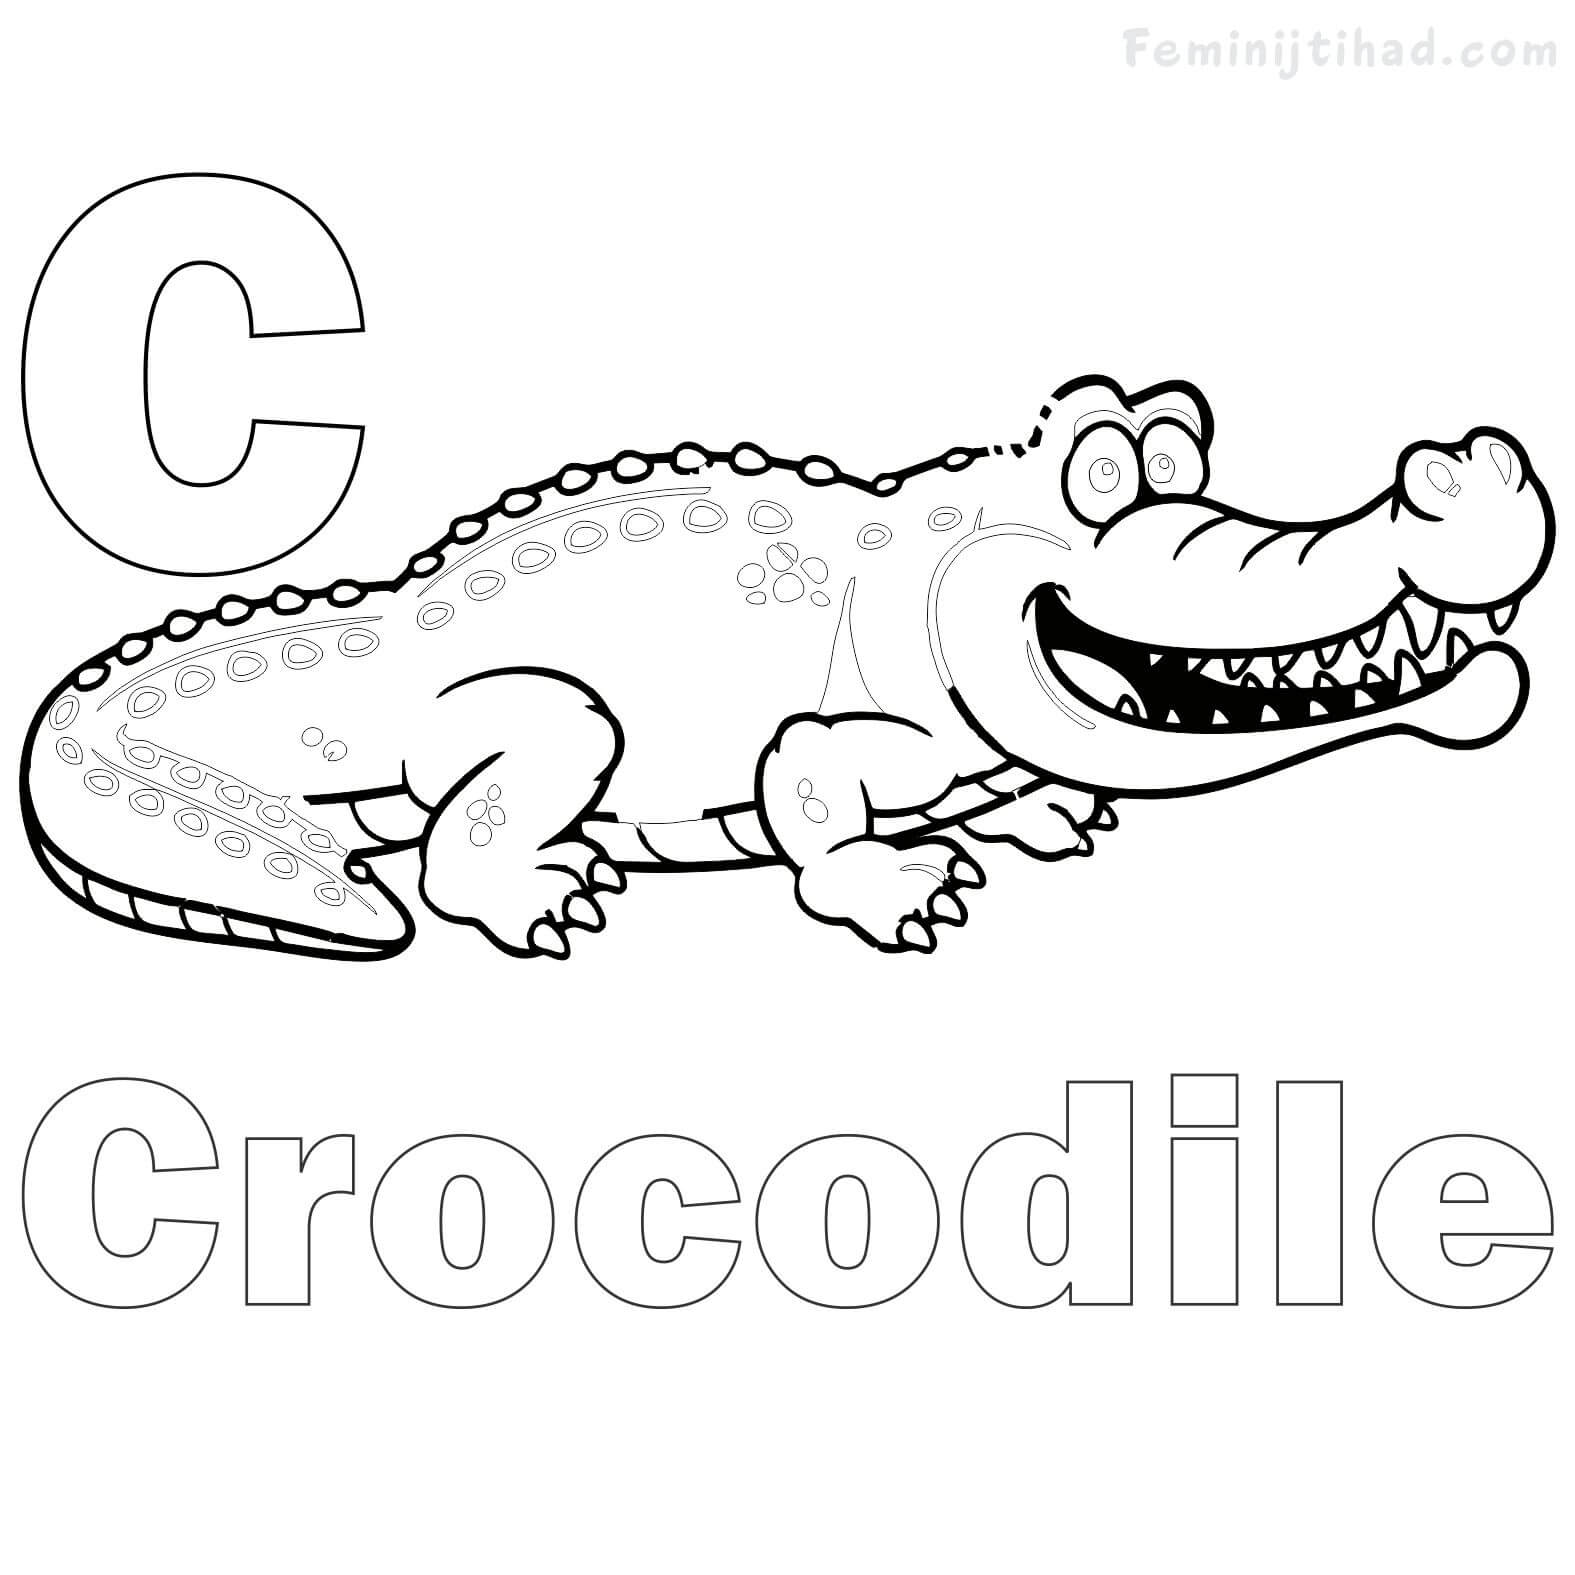 saltwater crocodile coloring page